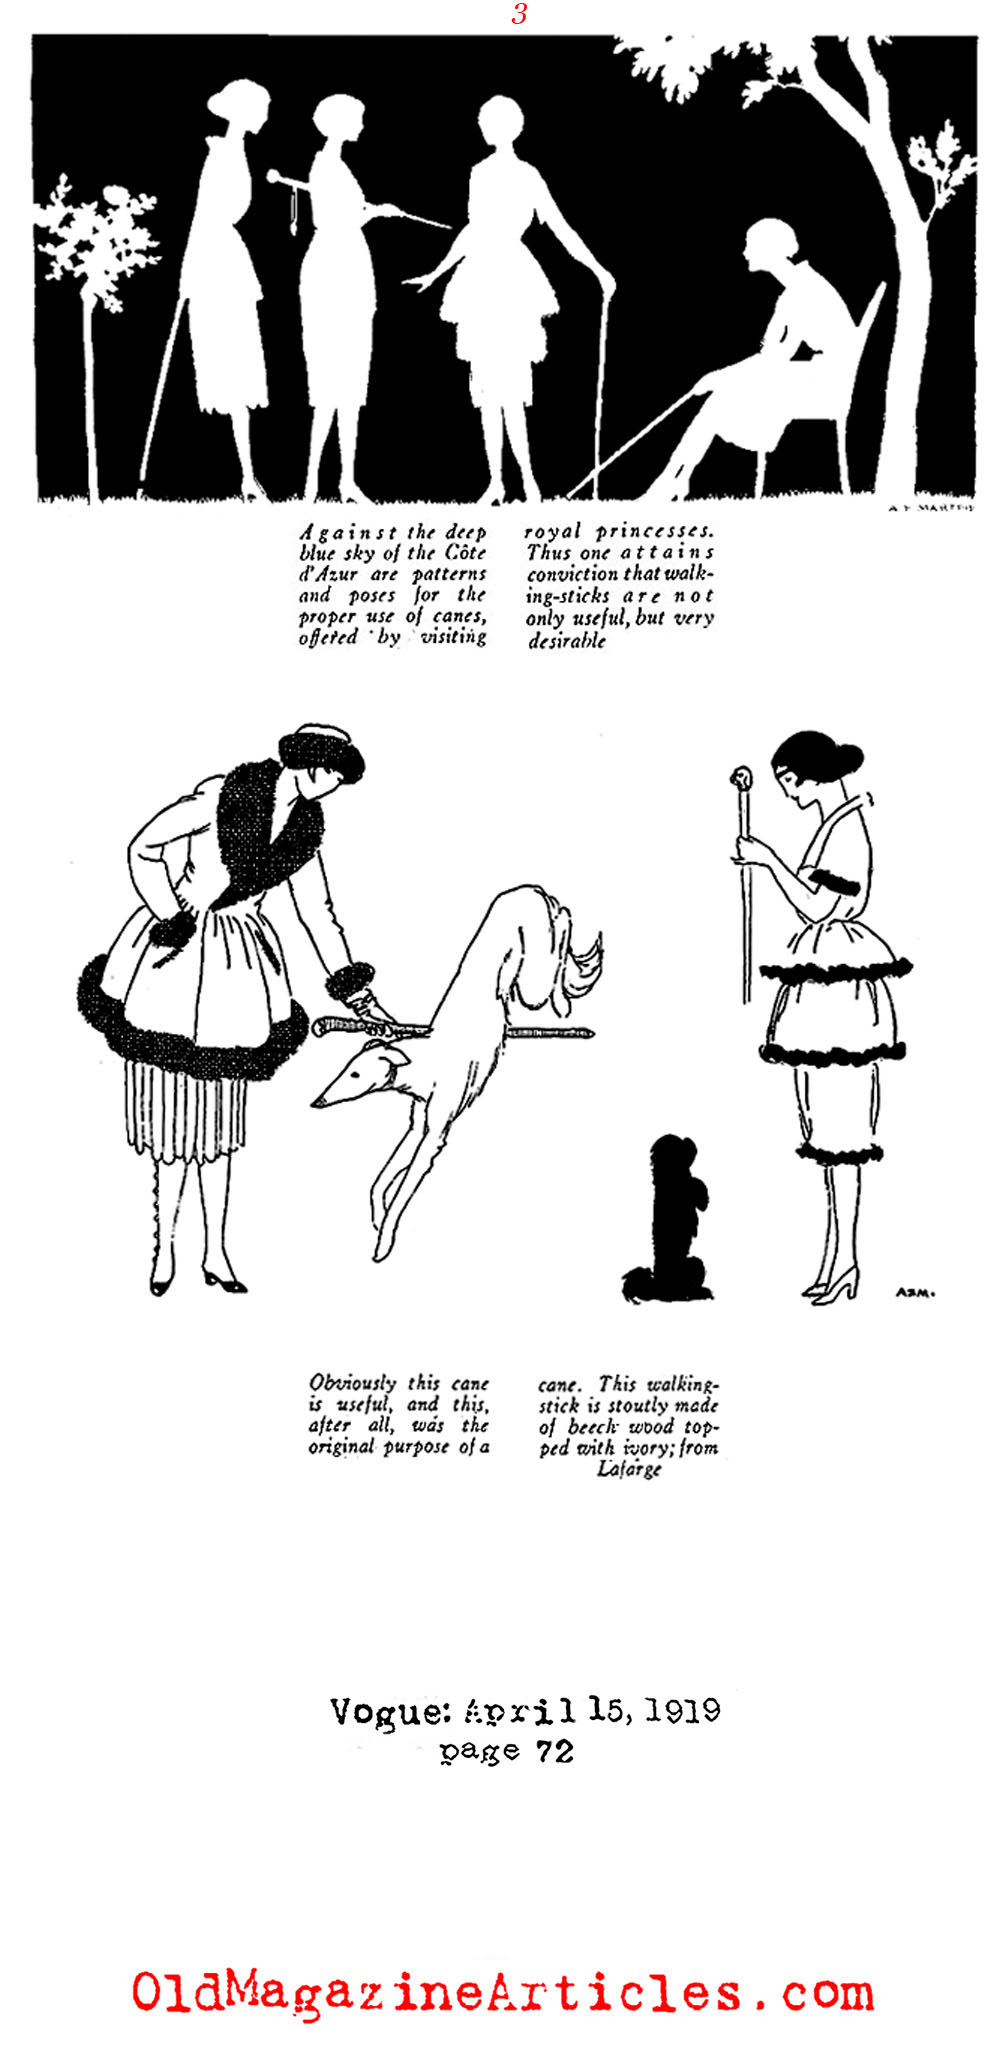 Paris Puts a Stick in the Mode...(Vogue Magazine, 1919)